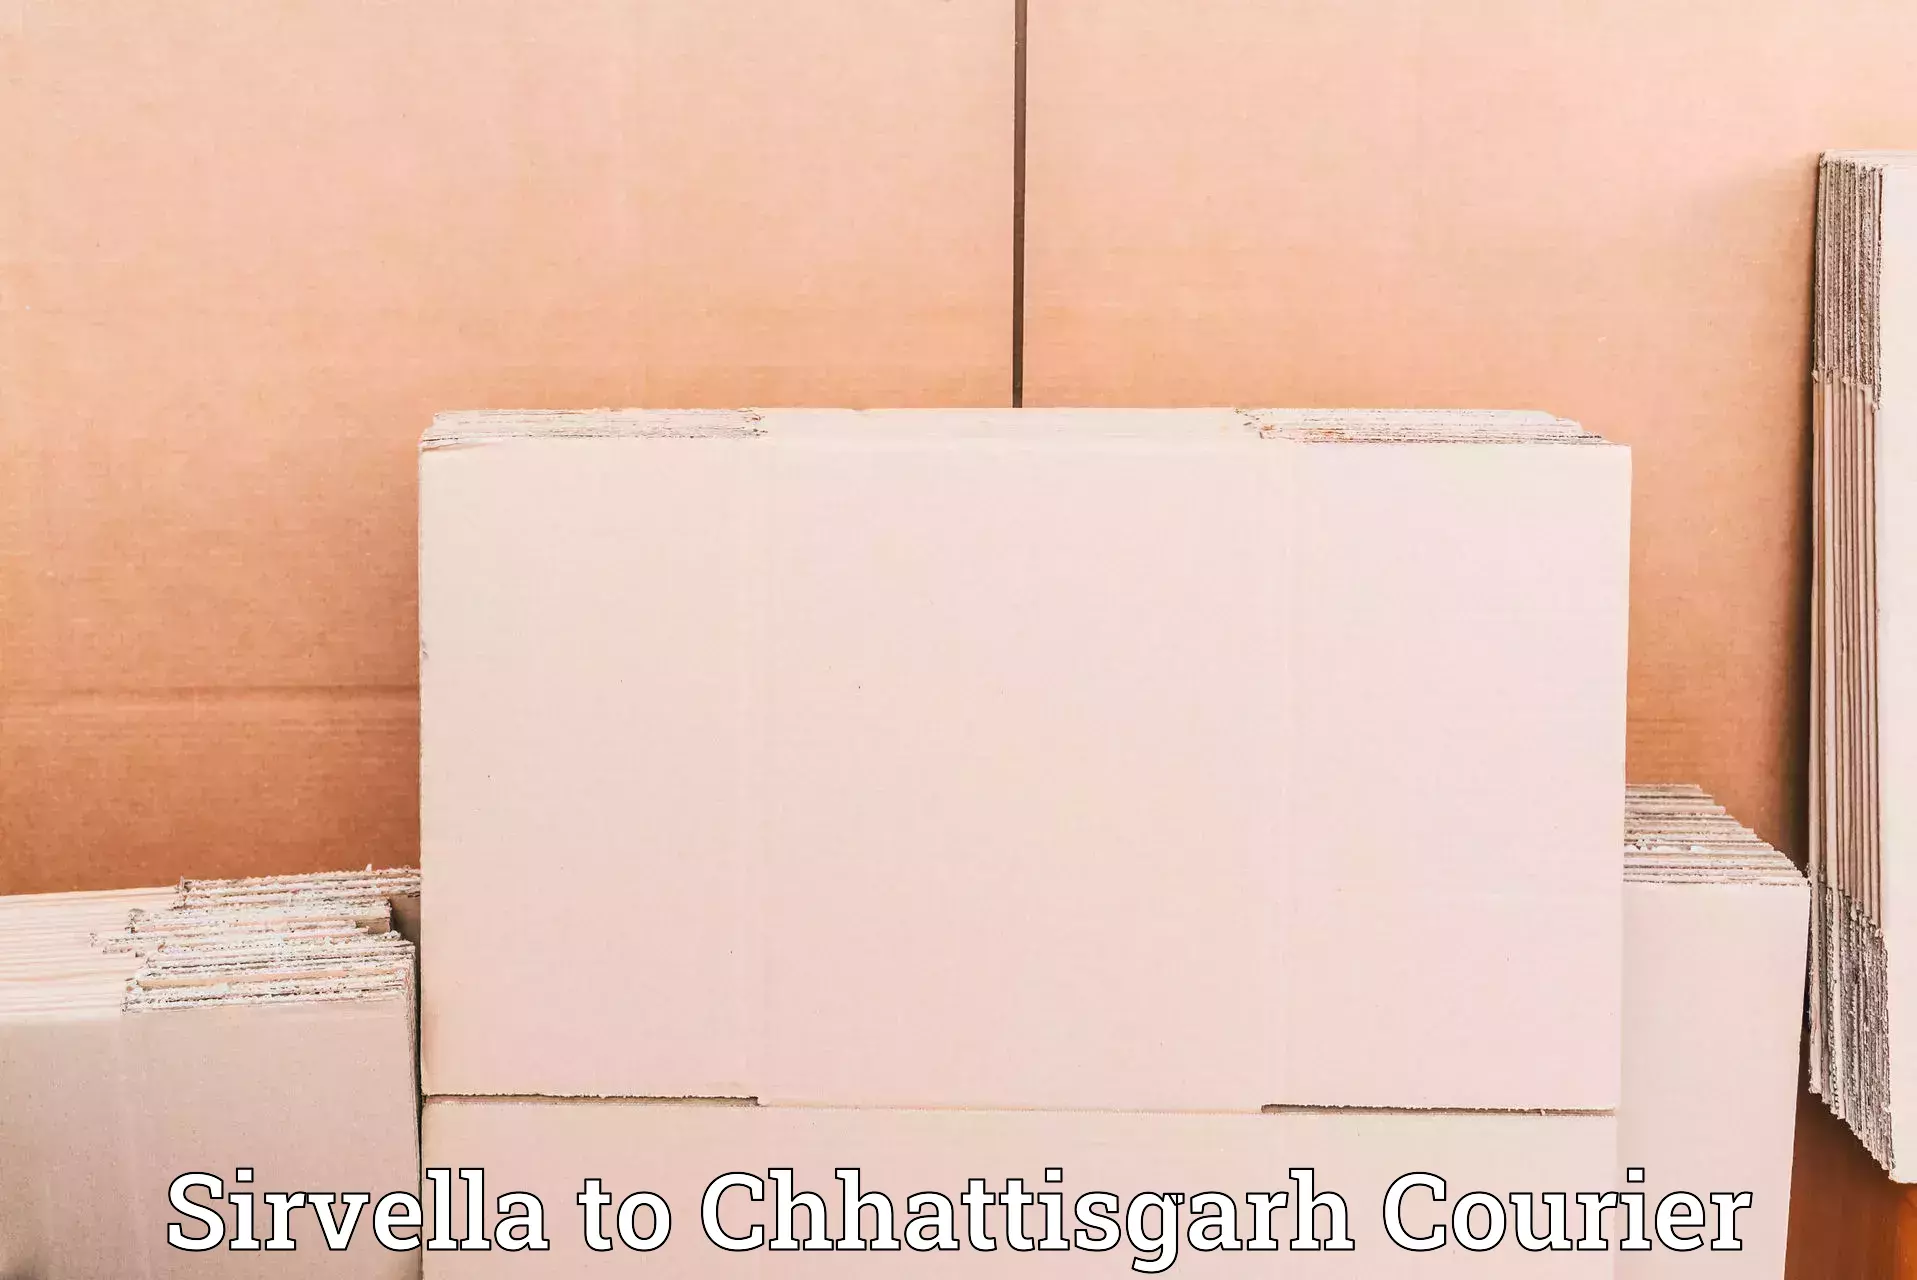 Courier service comparison Sirvella to Bhatapara